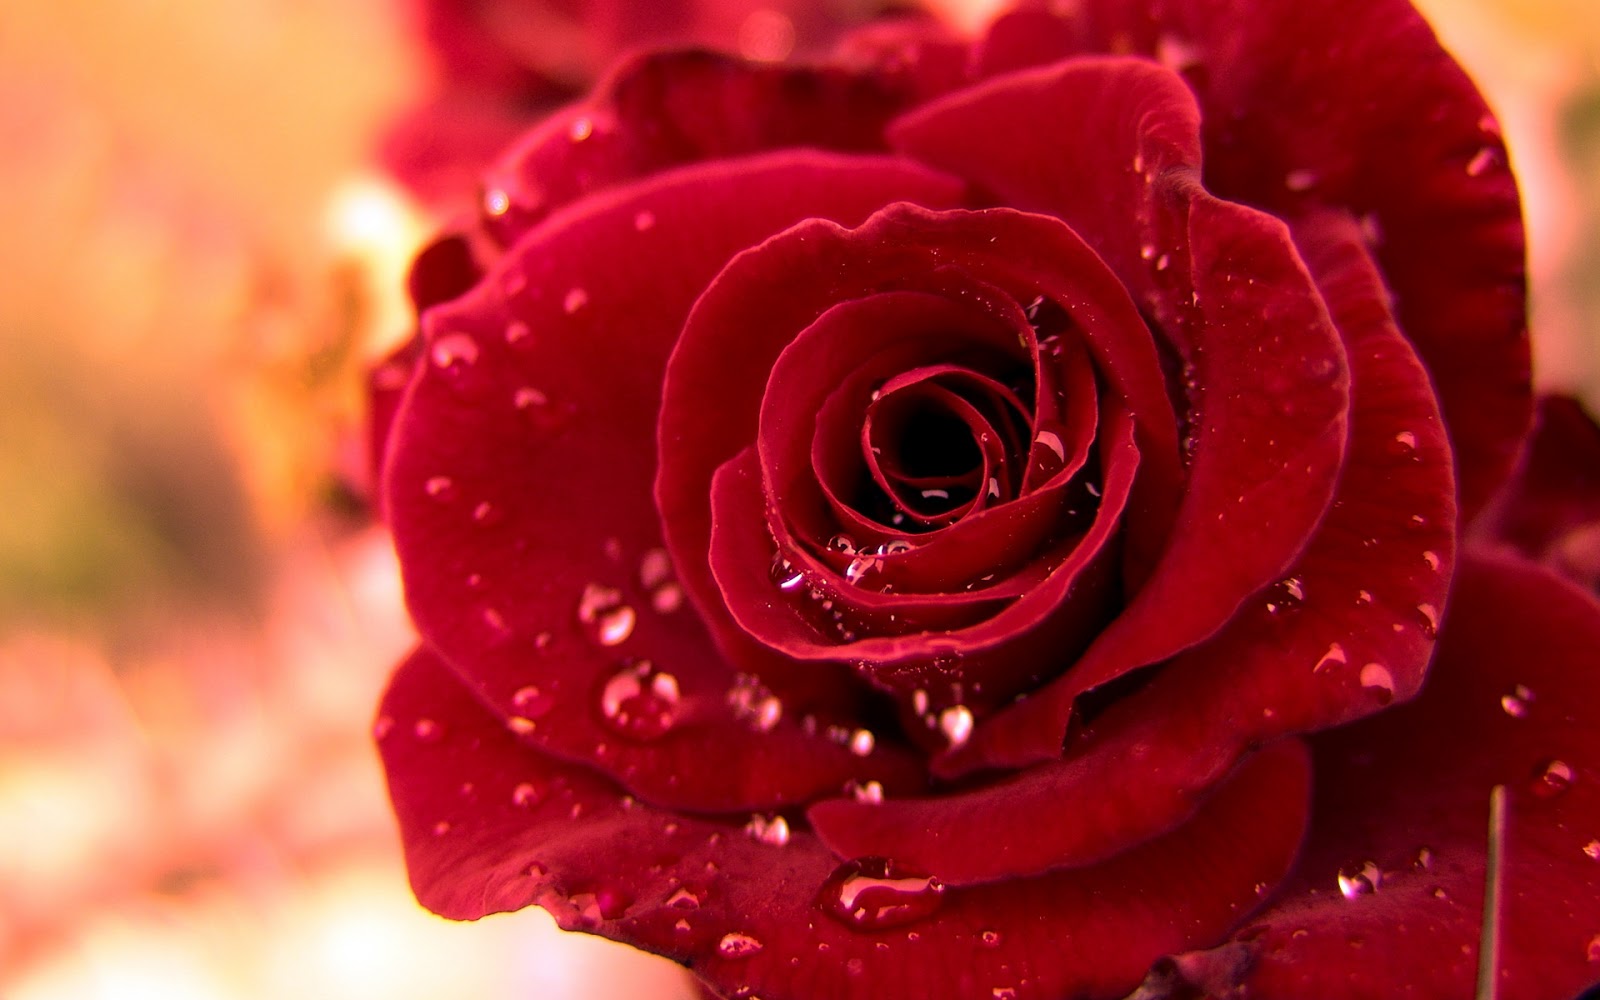 most beautiful roses wallpapers,flower,garden roses,red,rose,petal